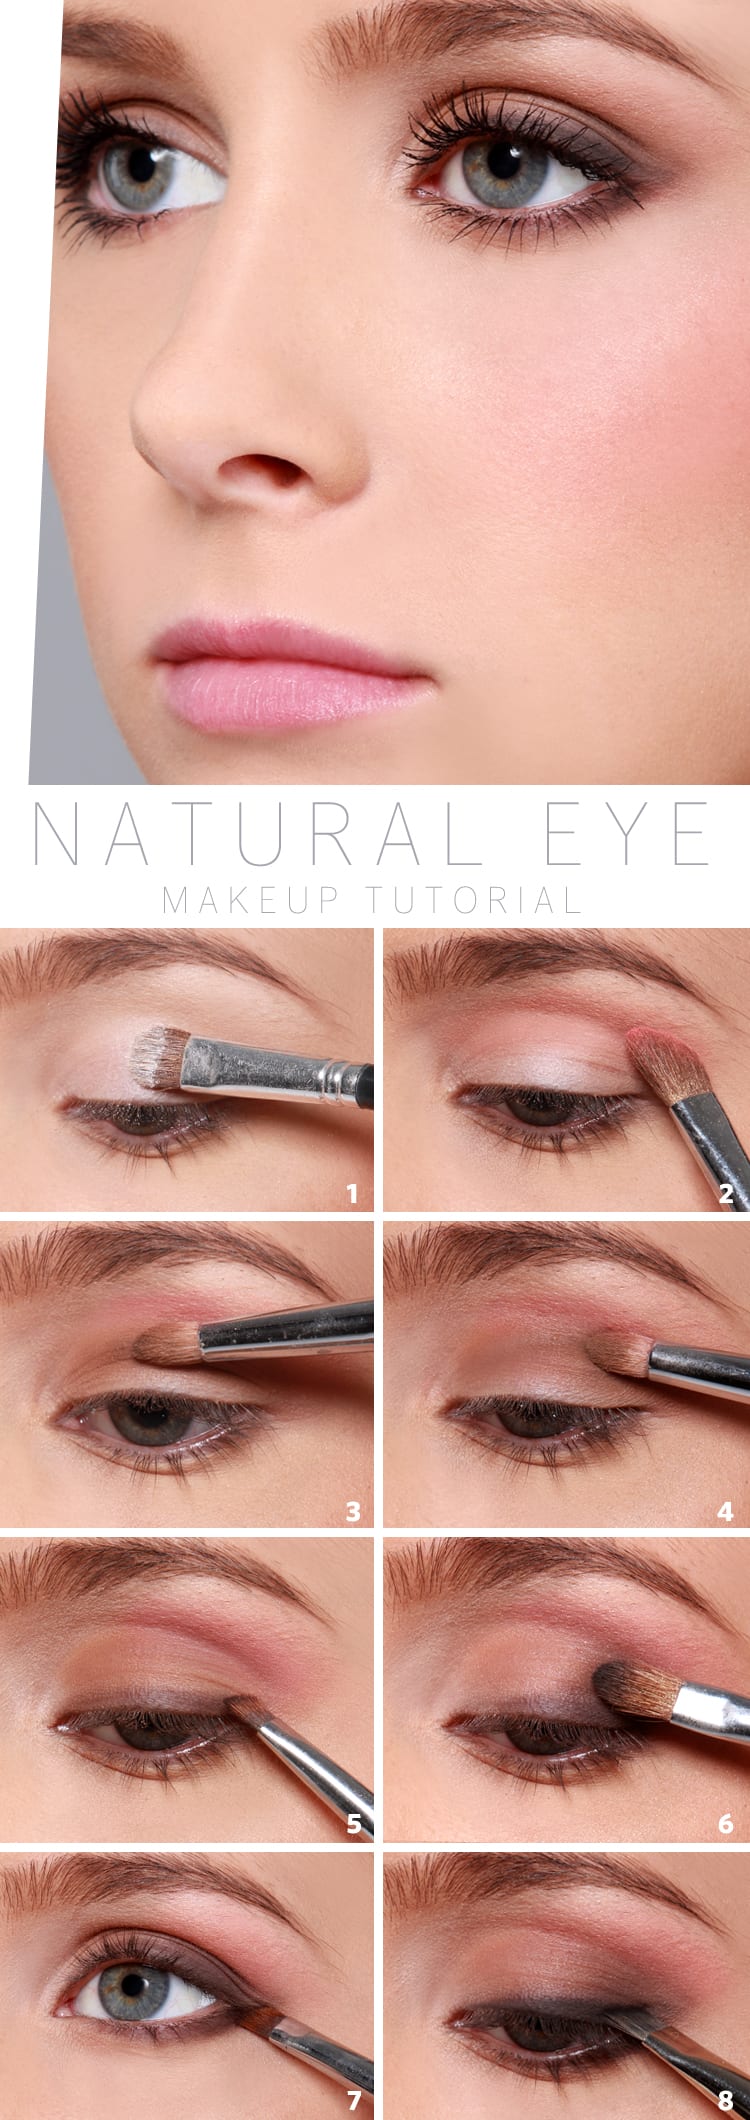 Lulus How-To: Natural Eye Makeup Tutorial Lulus.com Blog